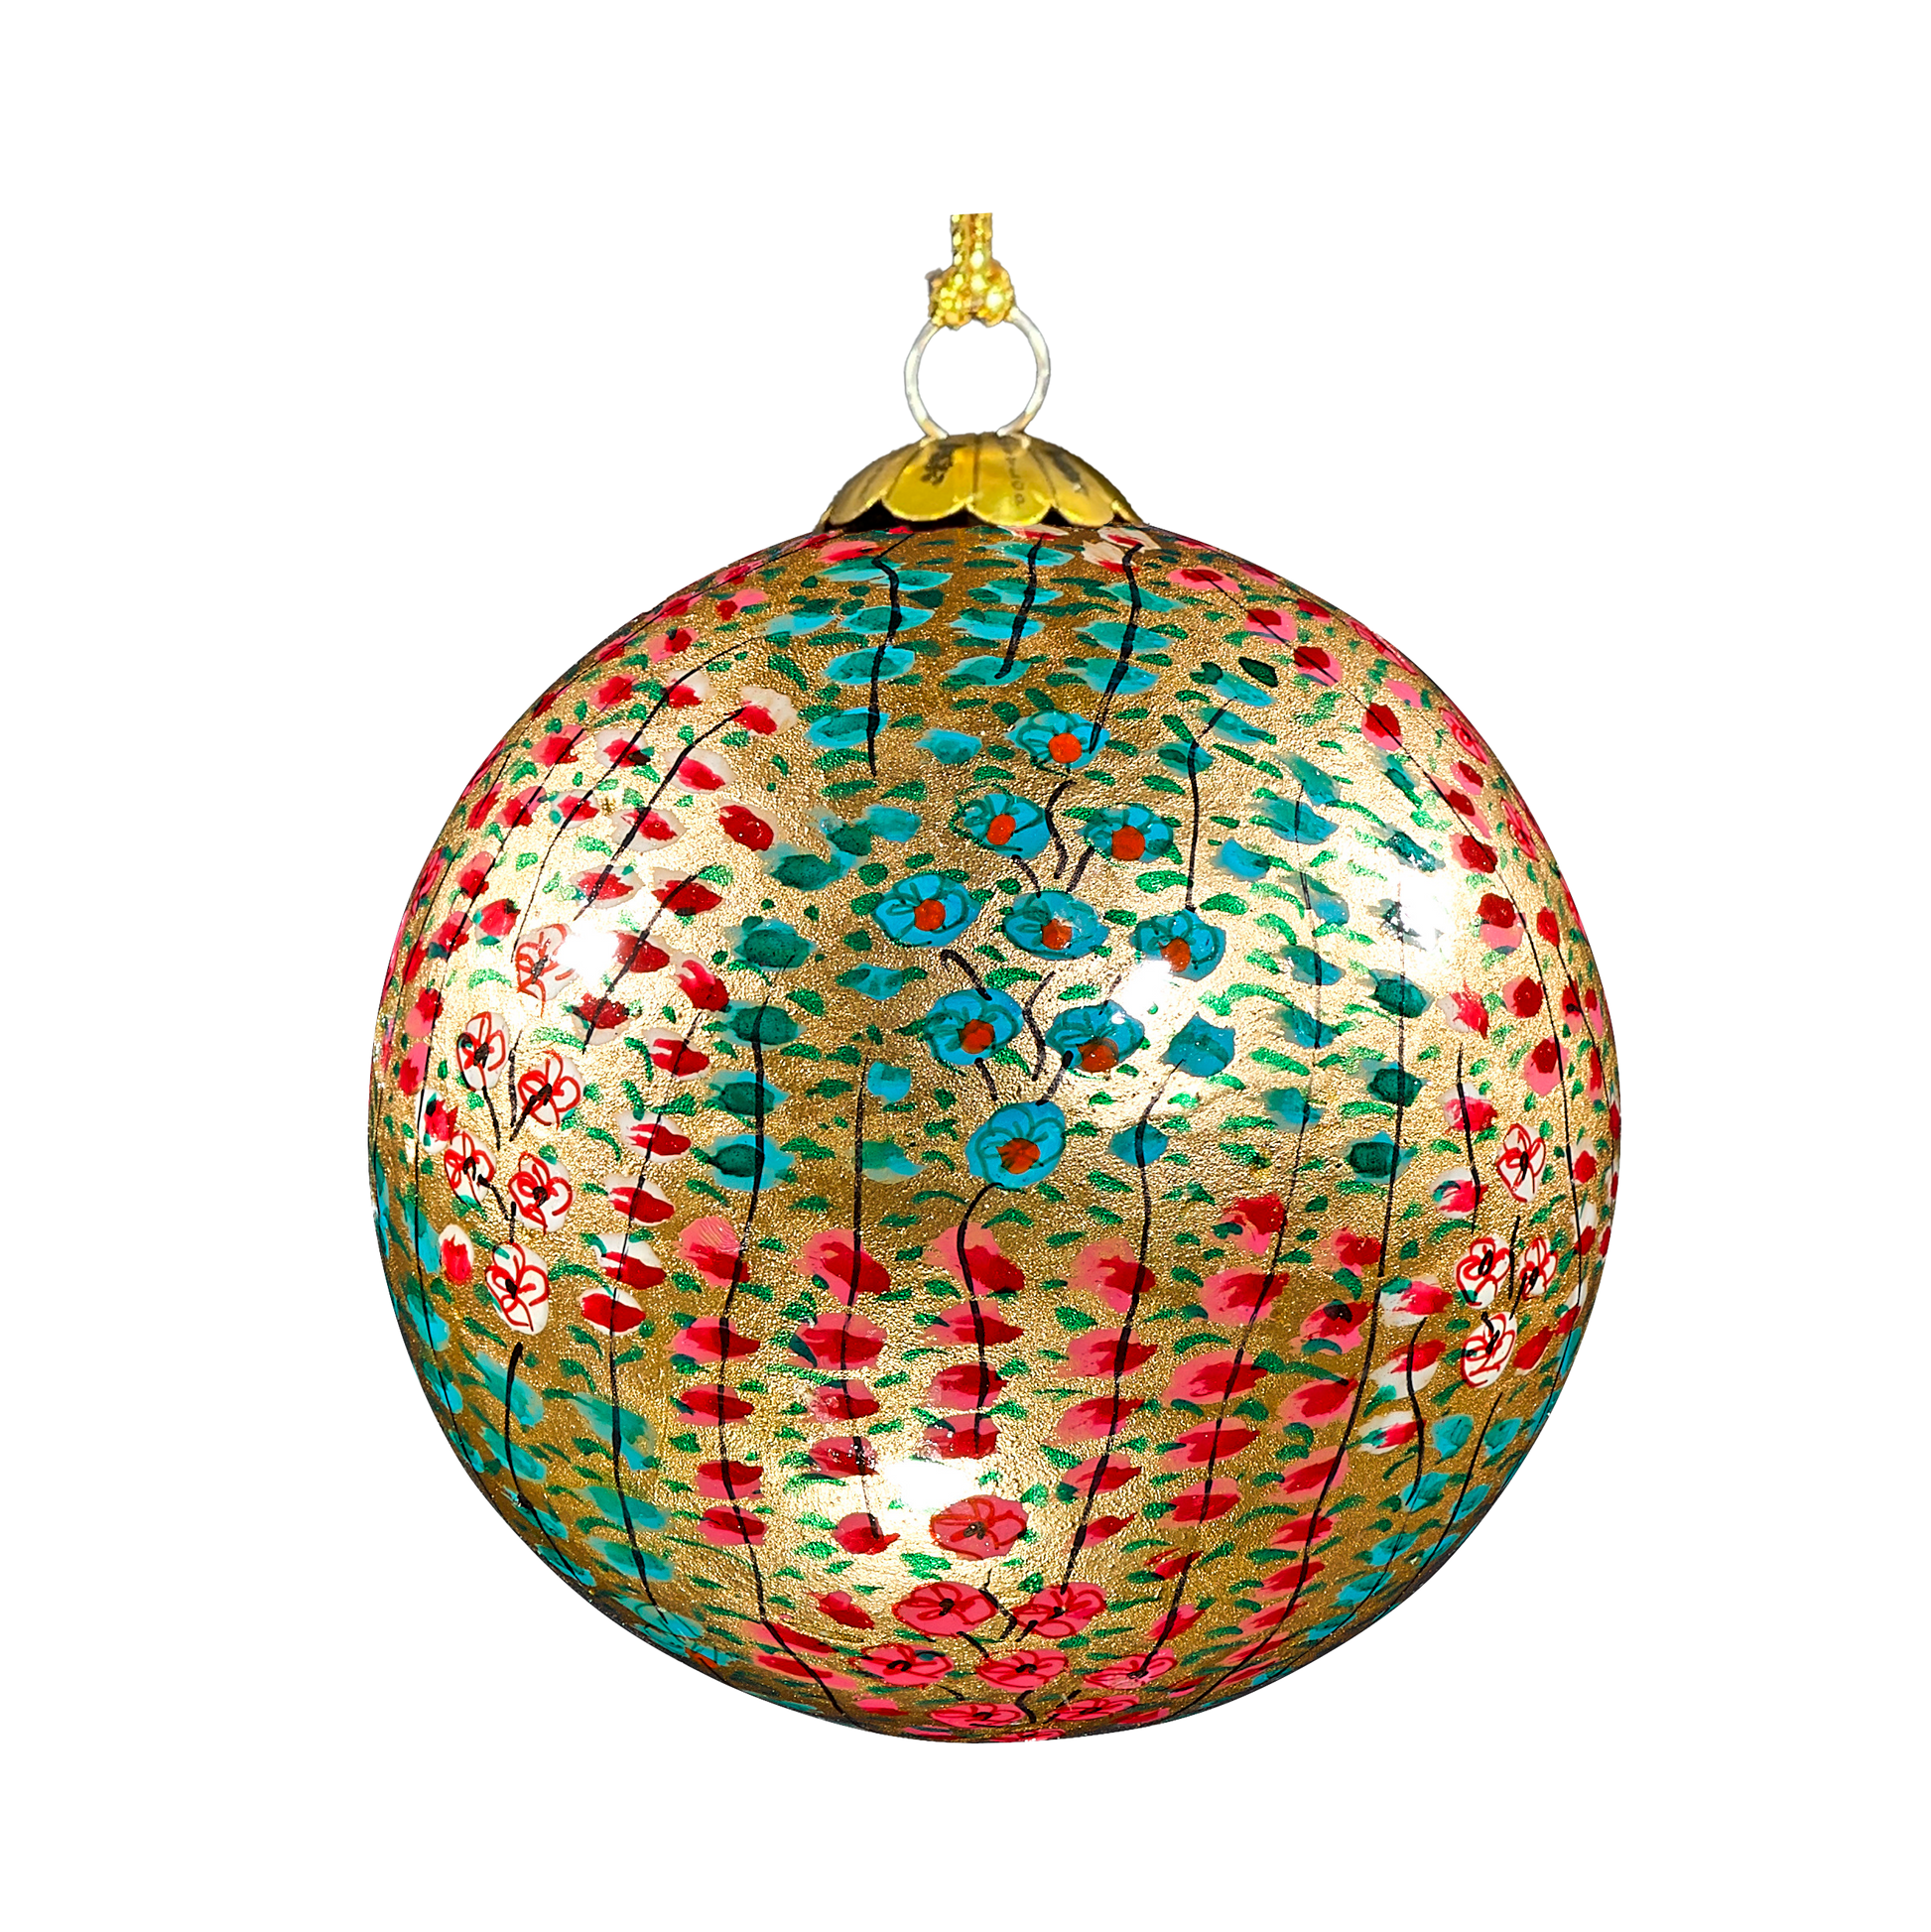 Golden Hazara Christmas Bauble for Christmas tree decorations